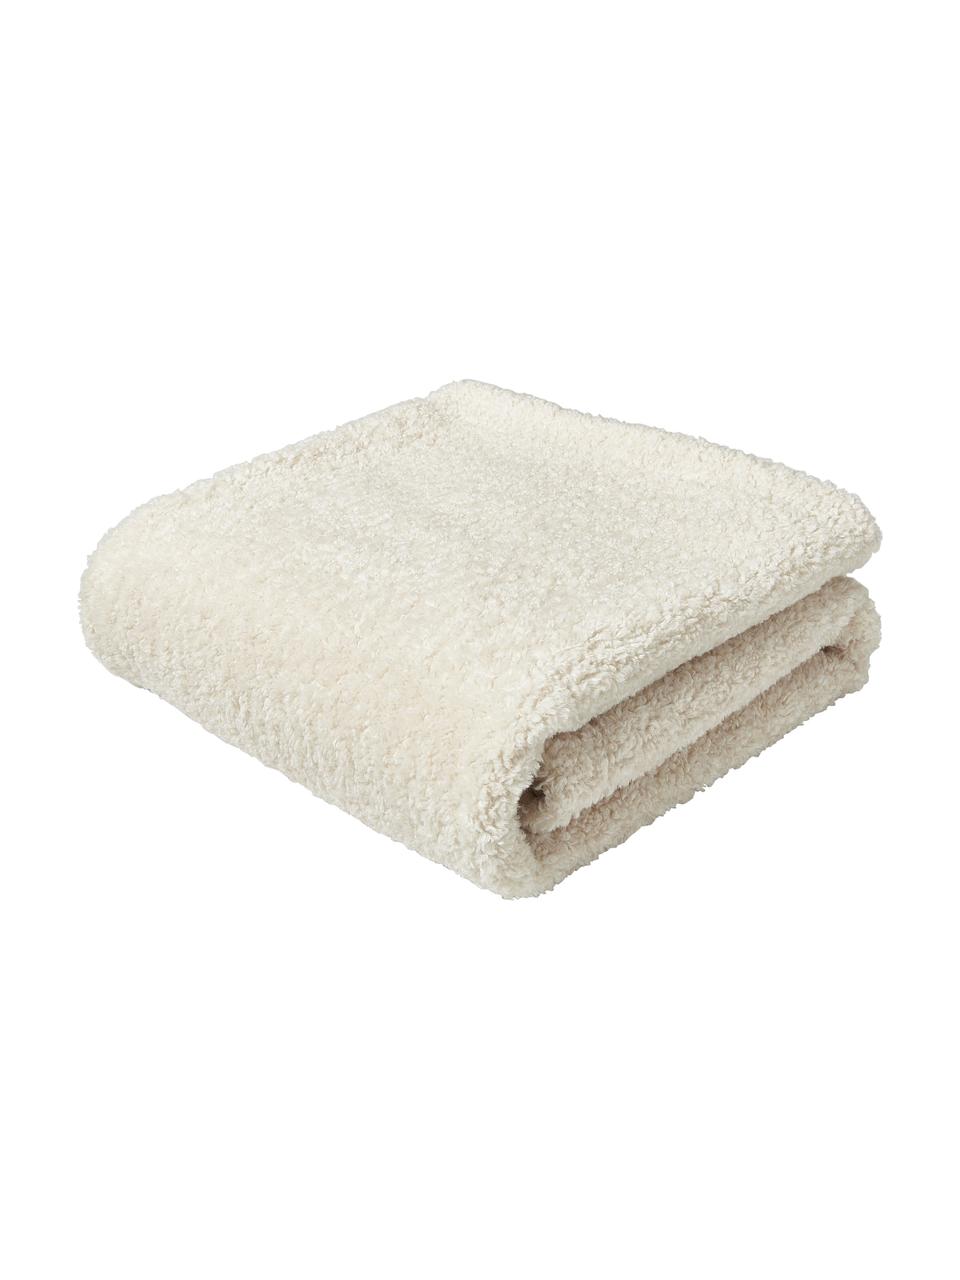 Coperta in tessuto teddy bianco crema Dotty, Retro: 95% poliestere, 5% elasta, Bianco crema, Larg. 130 x Lung. 170 cm